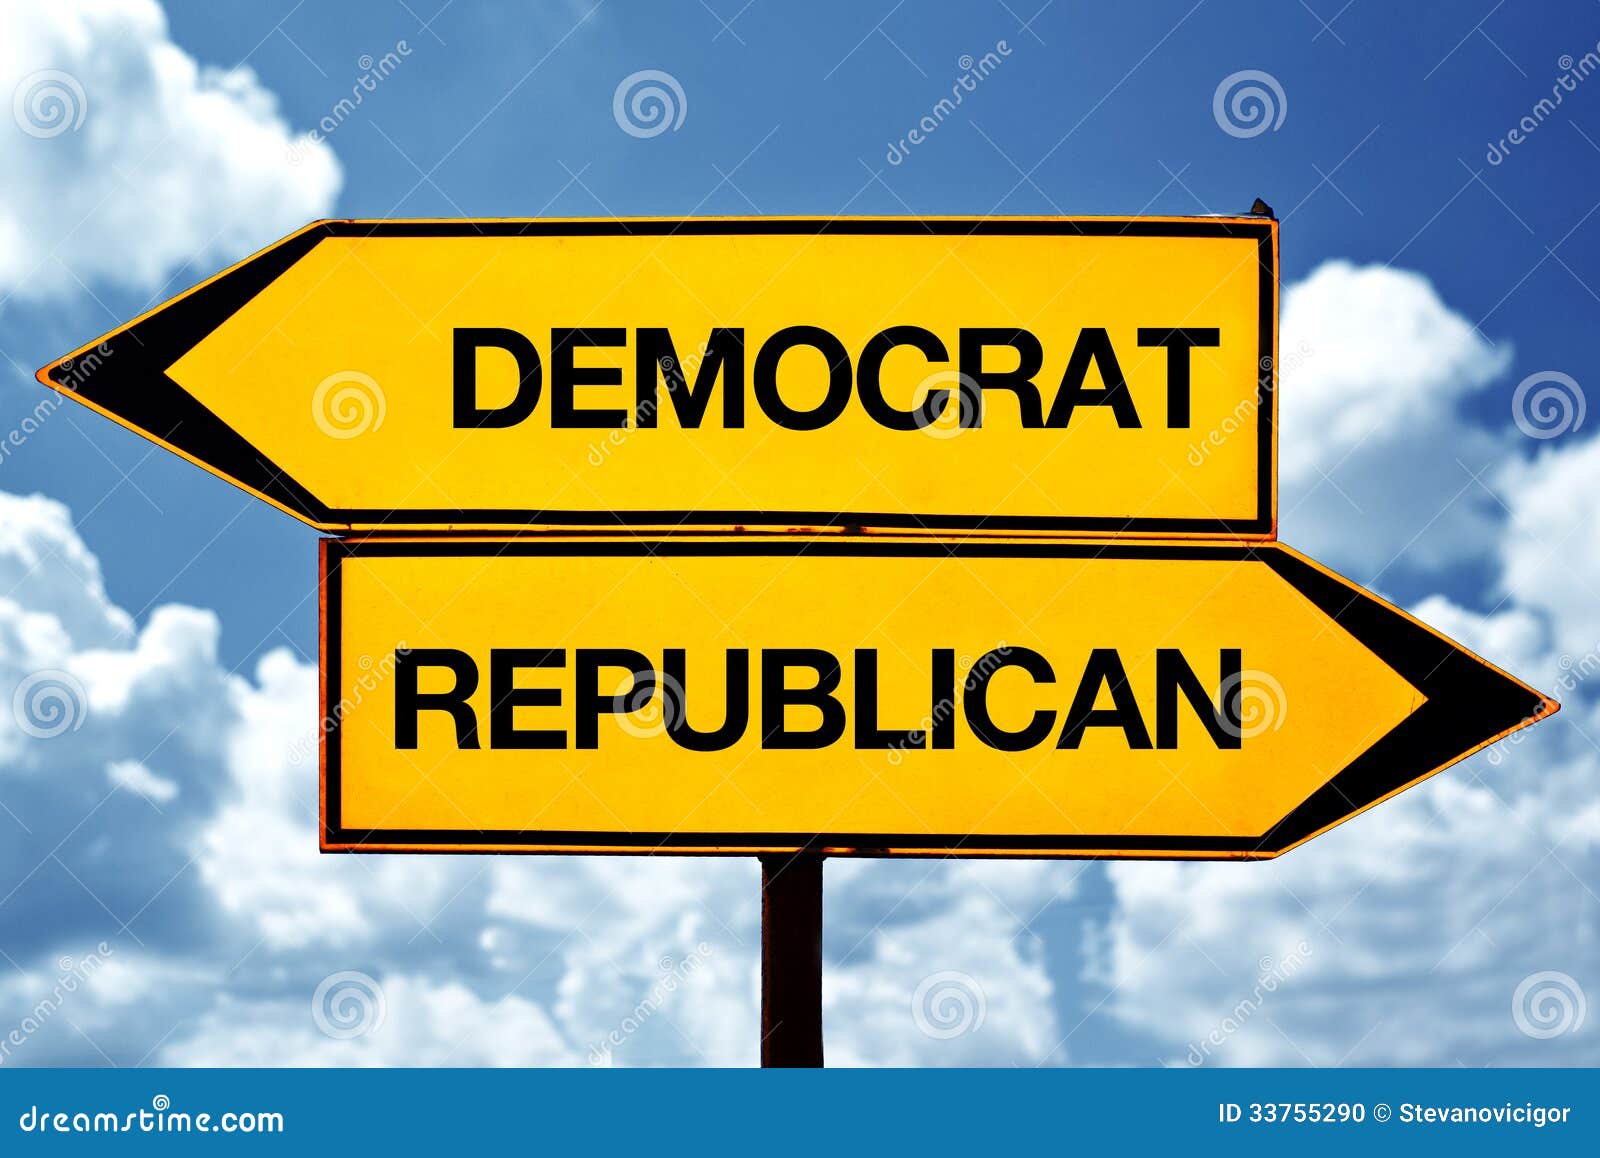 democrat or republican, opposite signs